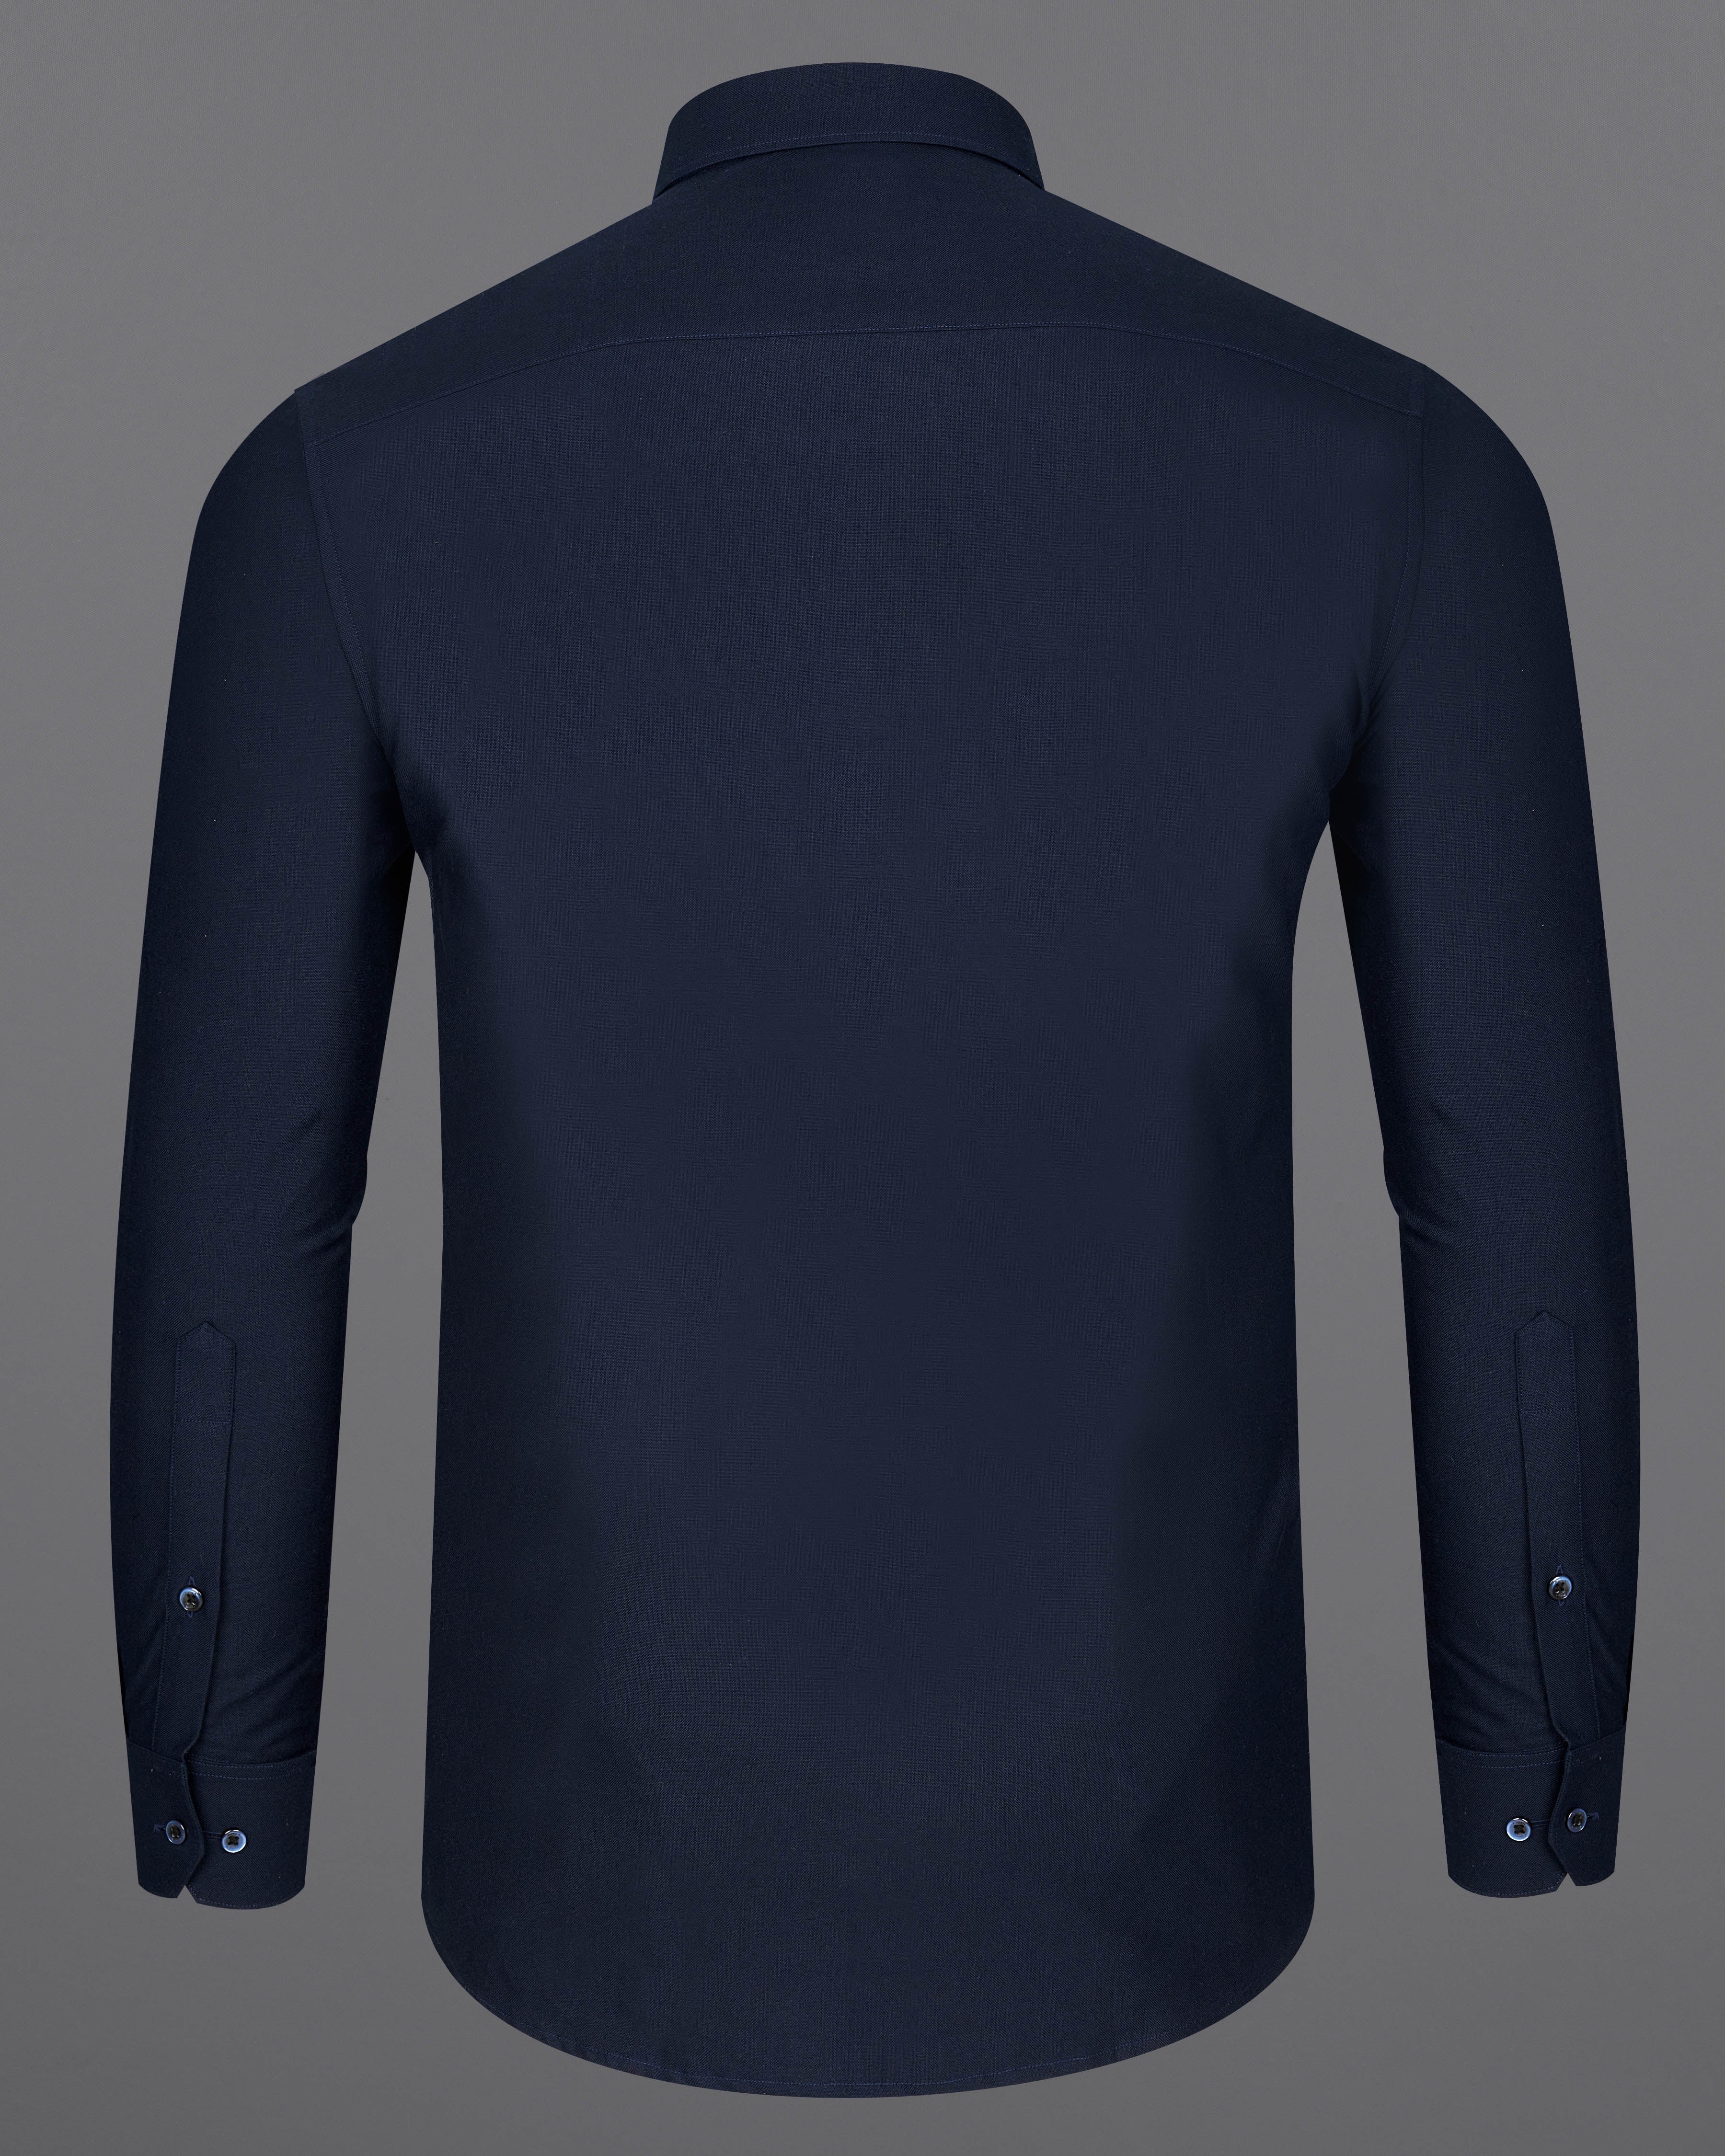 Mirage Navy Blue Royal Oxford Shirt